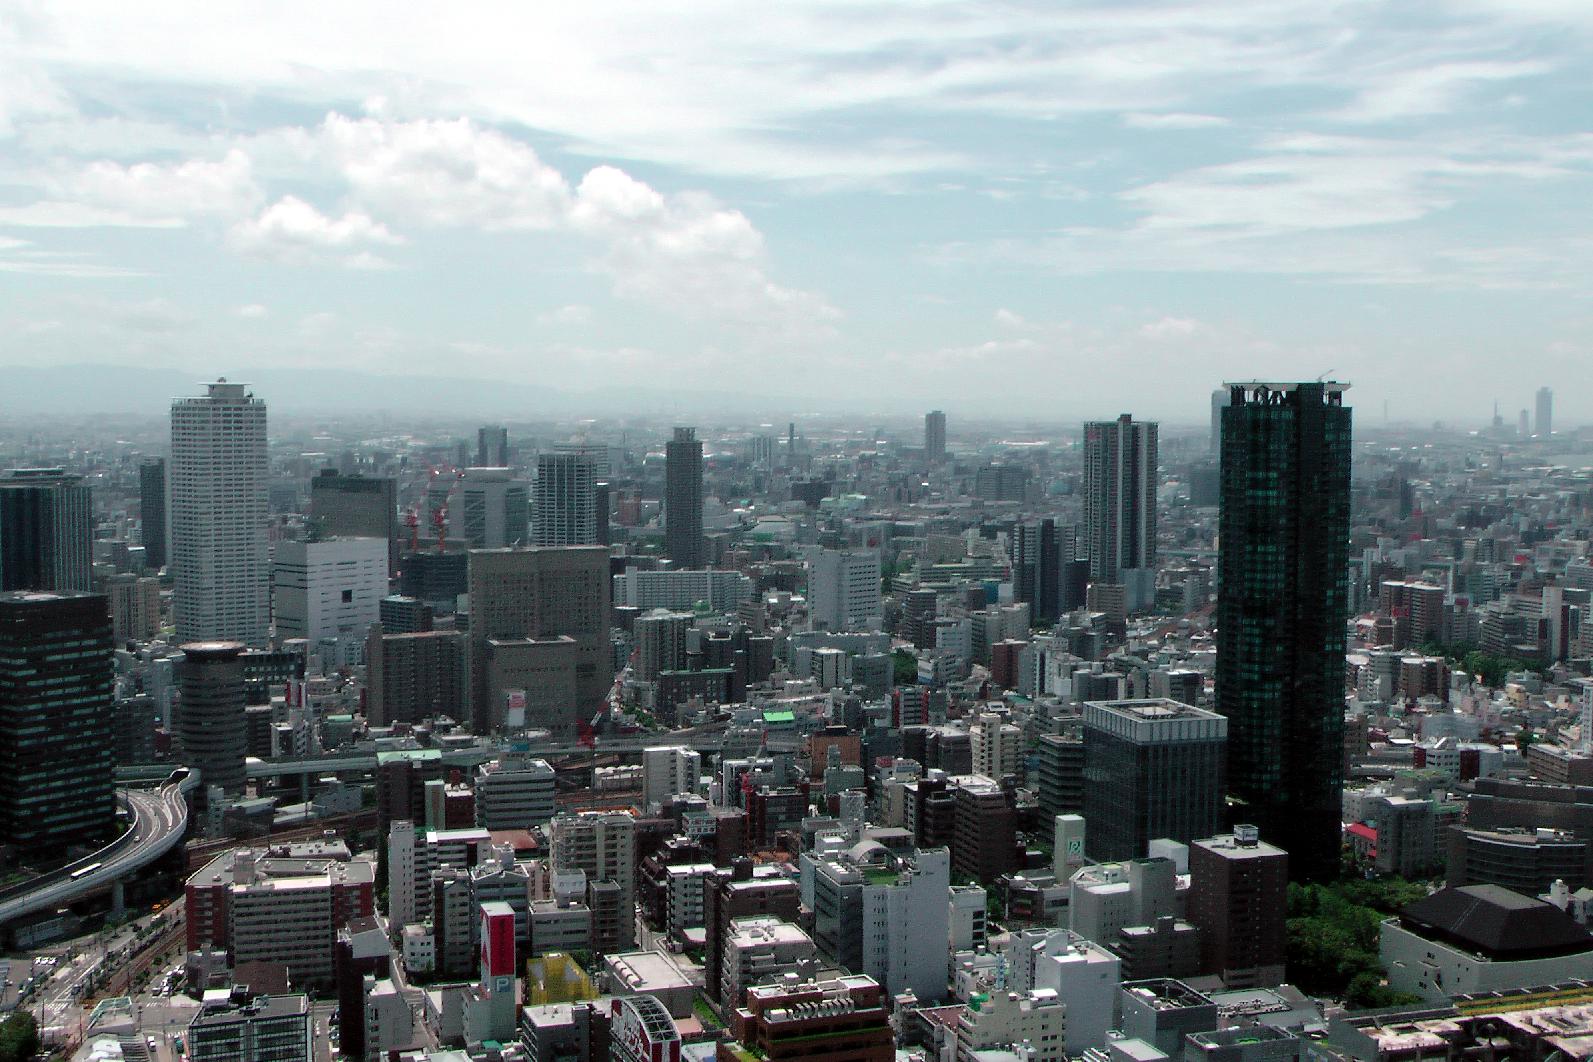 Osaka's city centre in the daytime :)